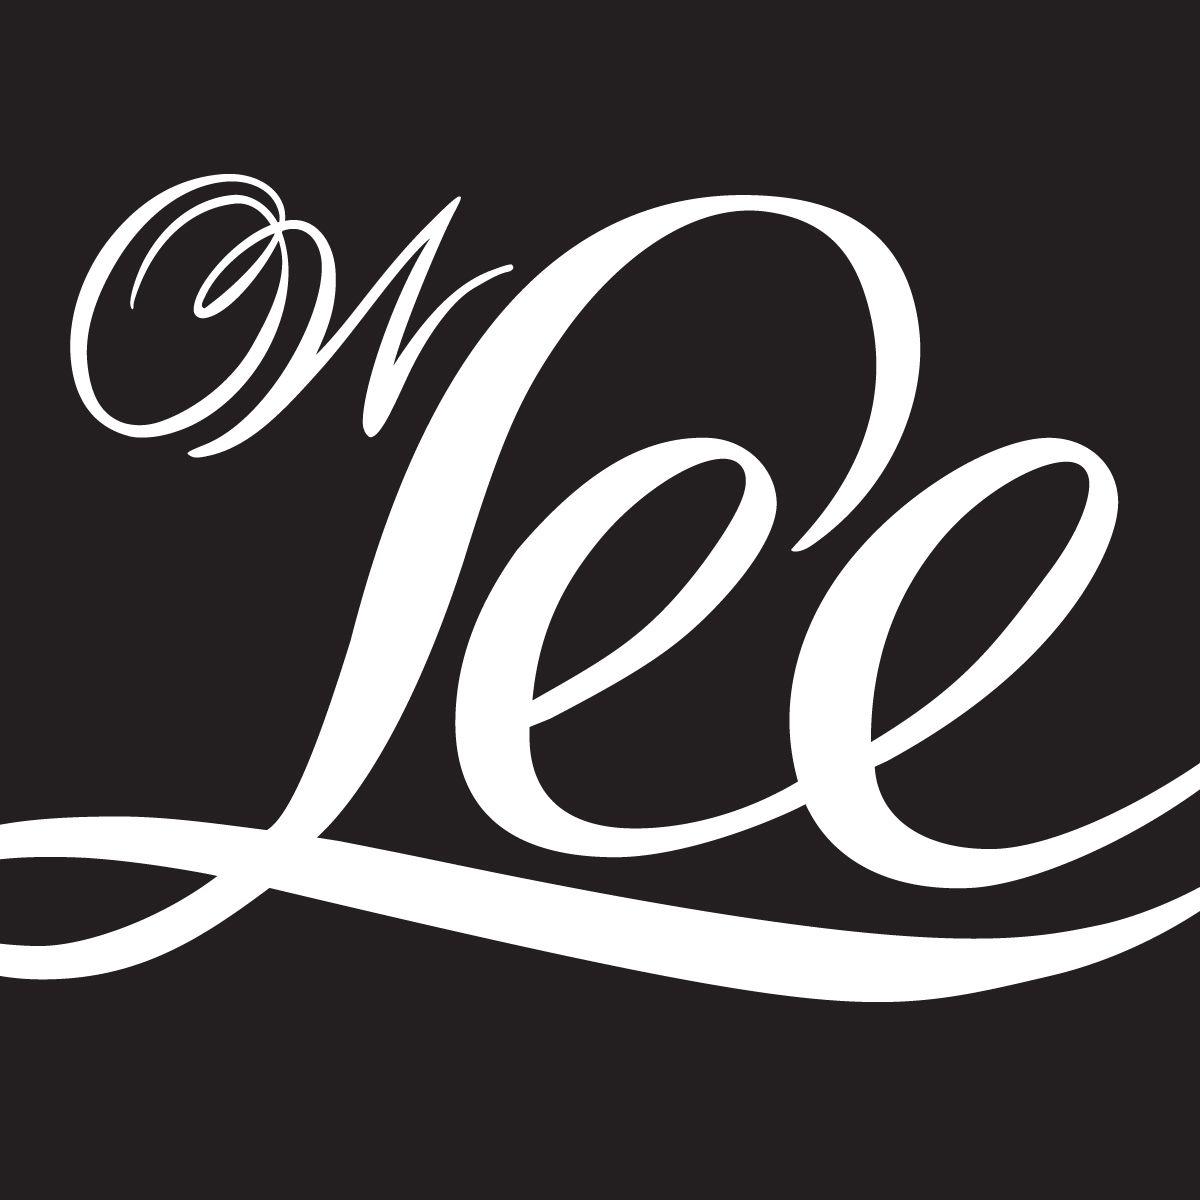 Lee Logo - Media.W. Lee